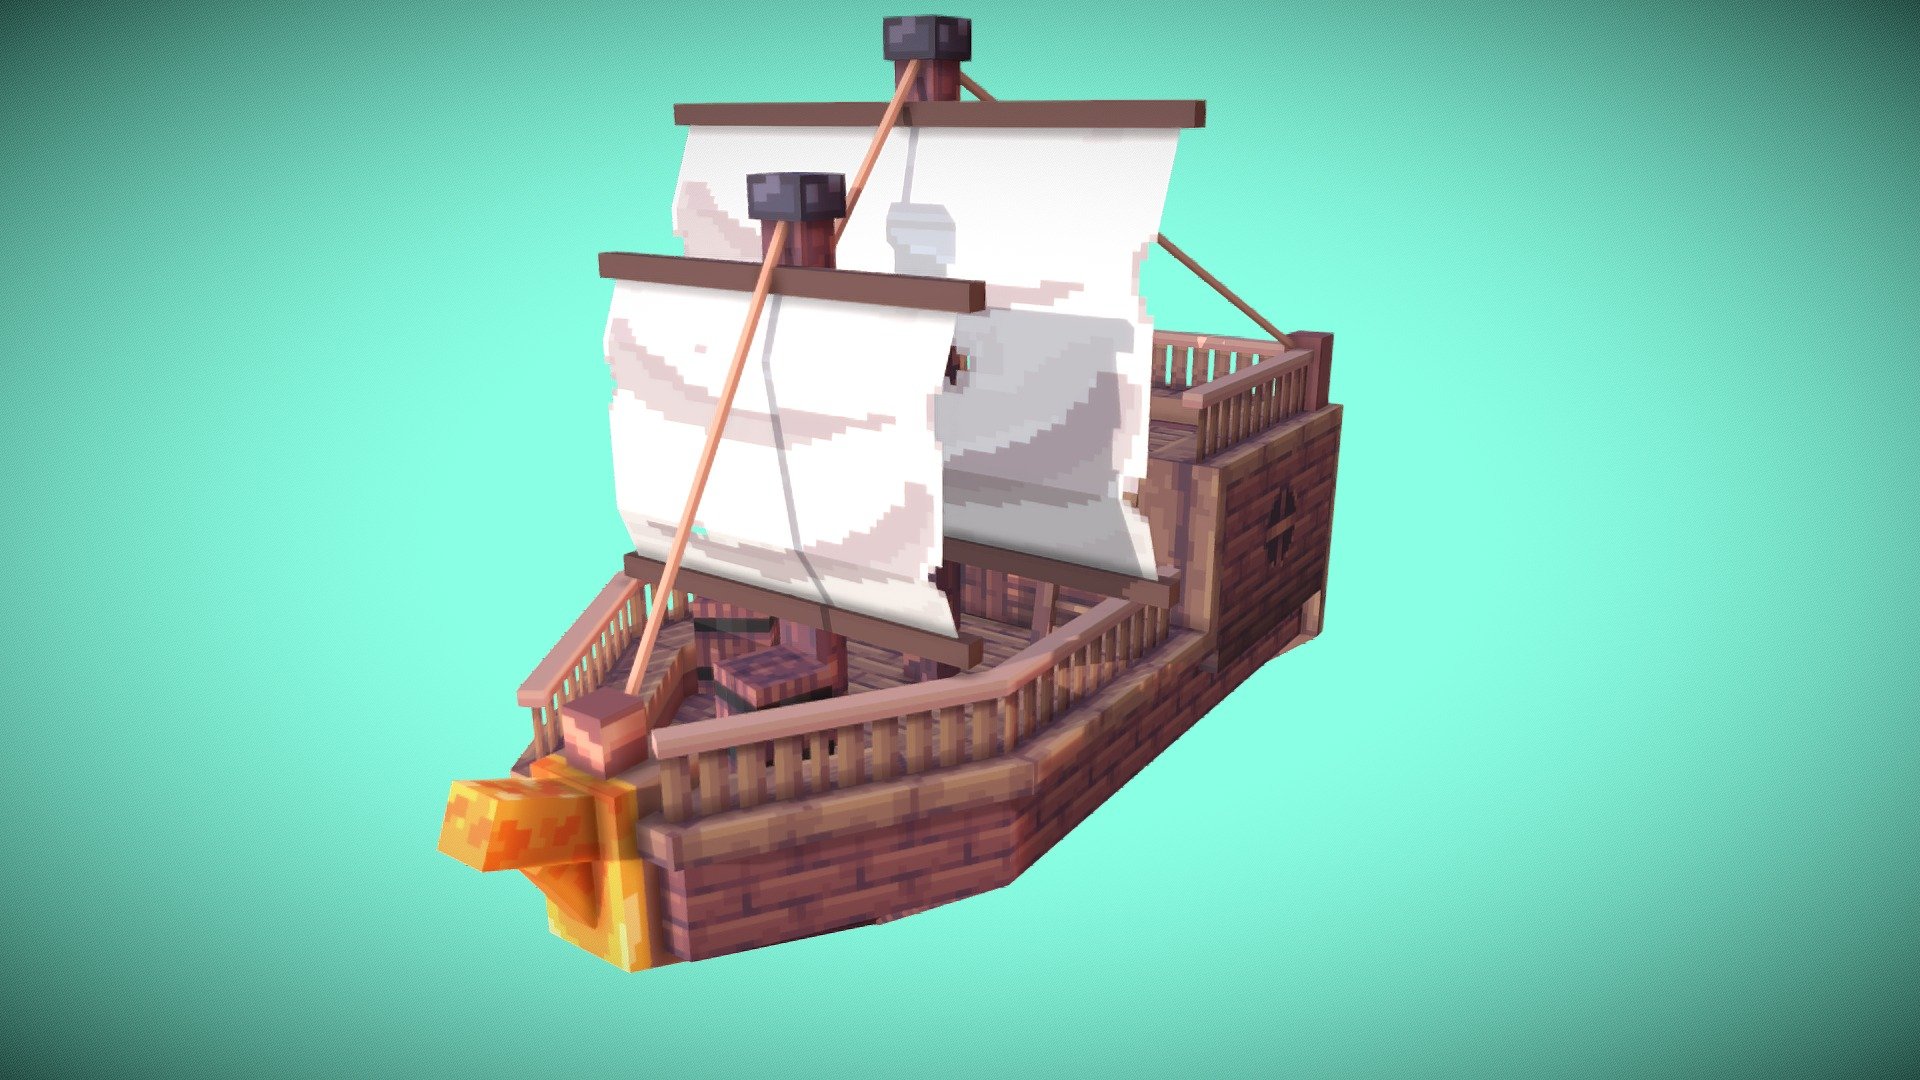 pirate-ship-3d-model-by-sapphire-studios-sapphire-studios-3666763